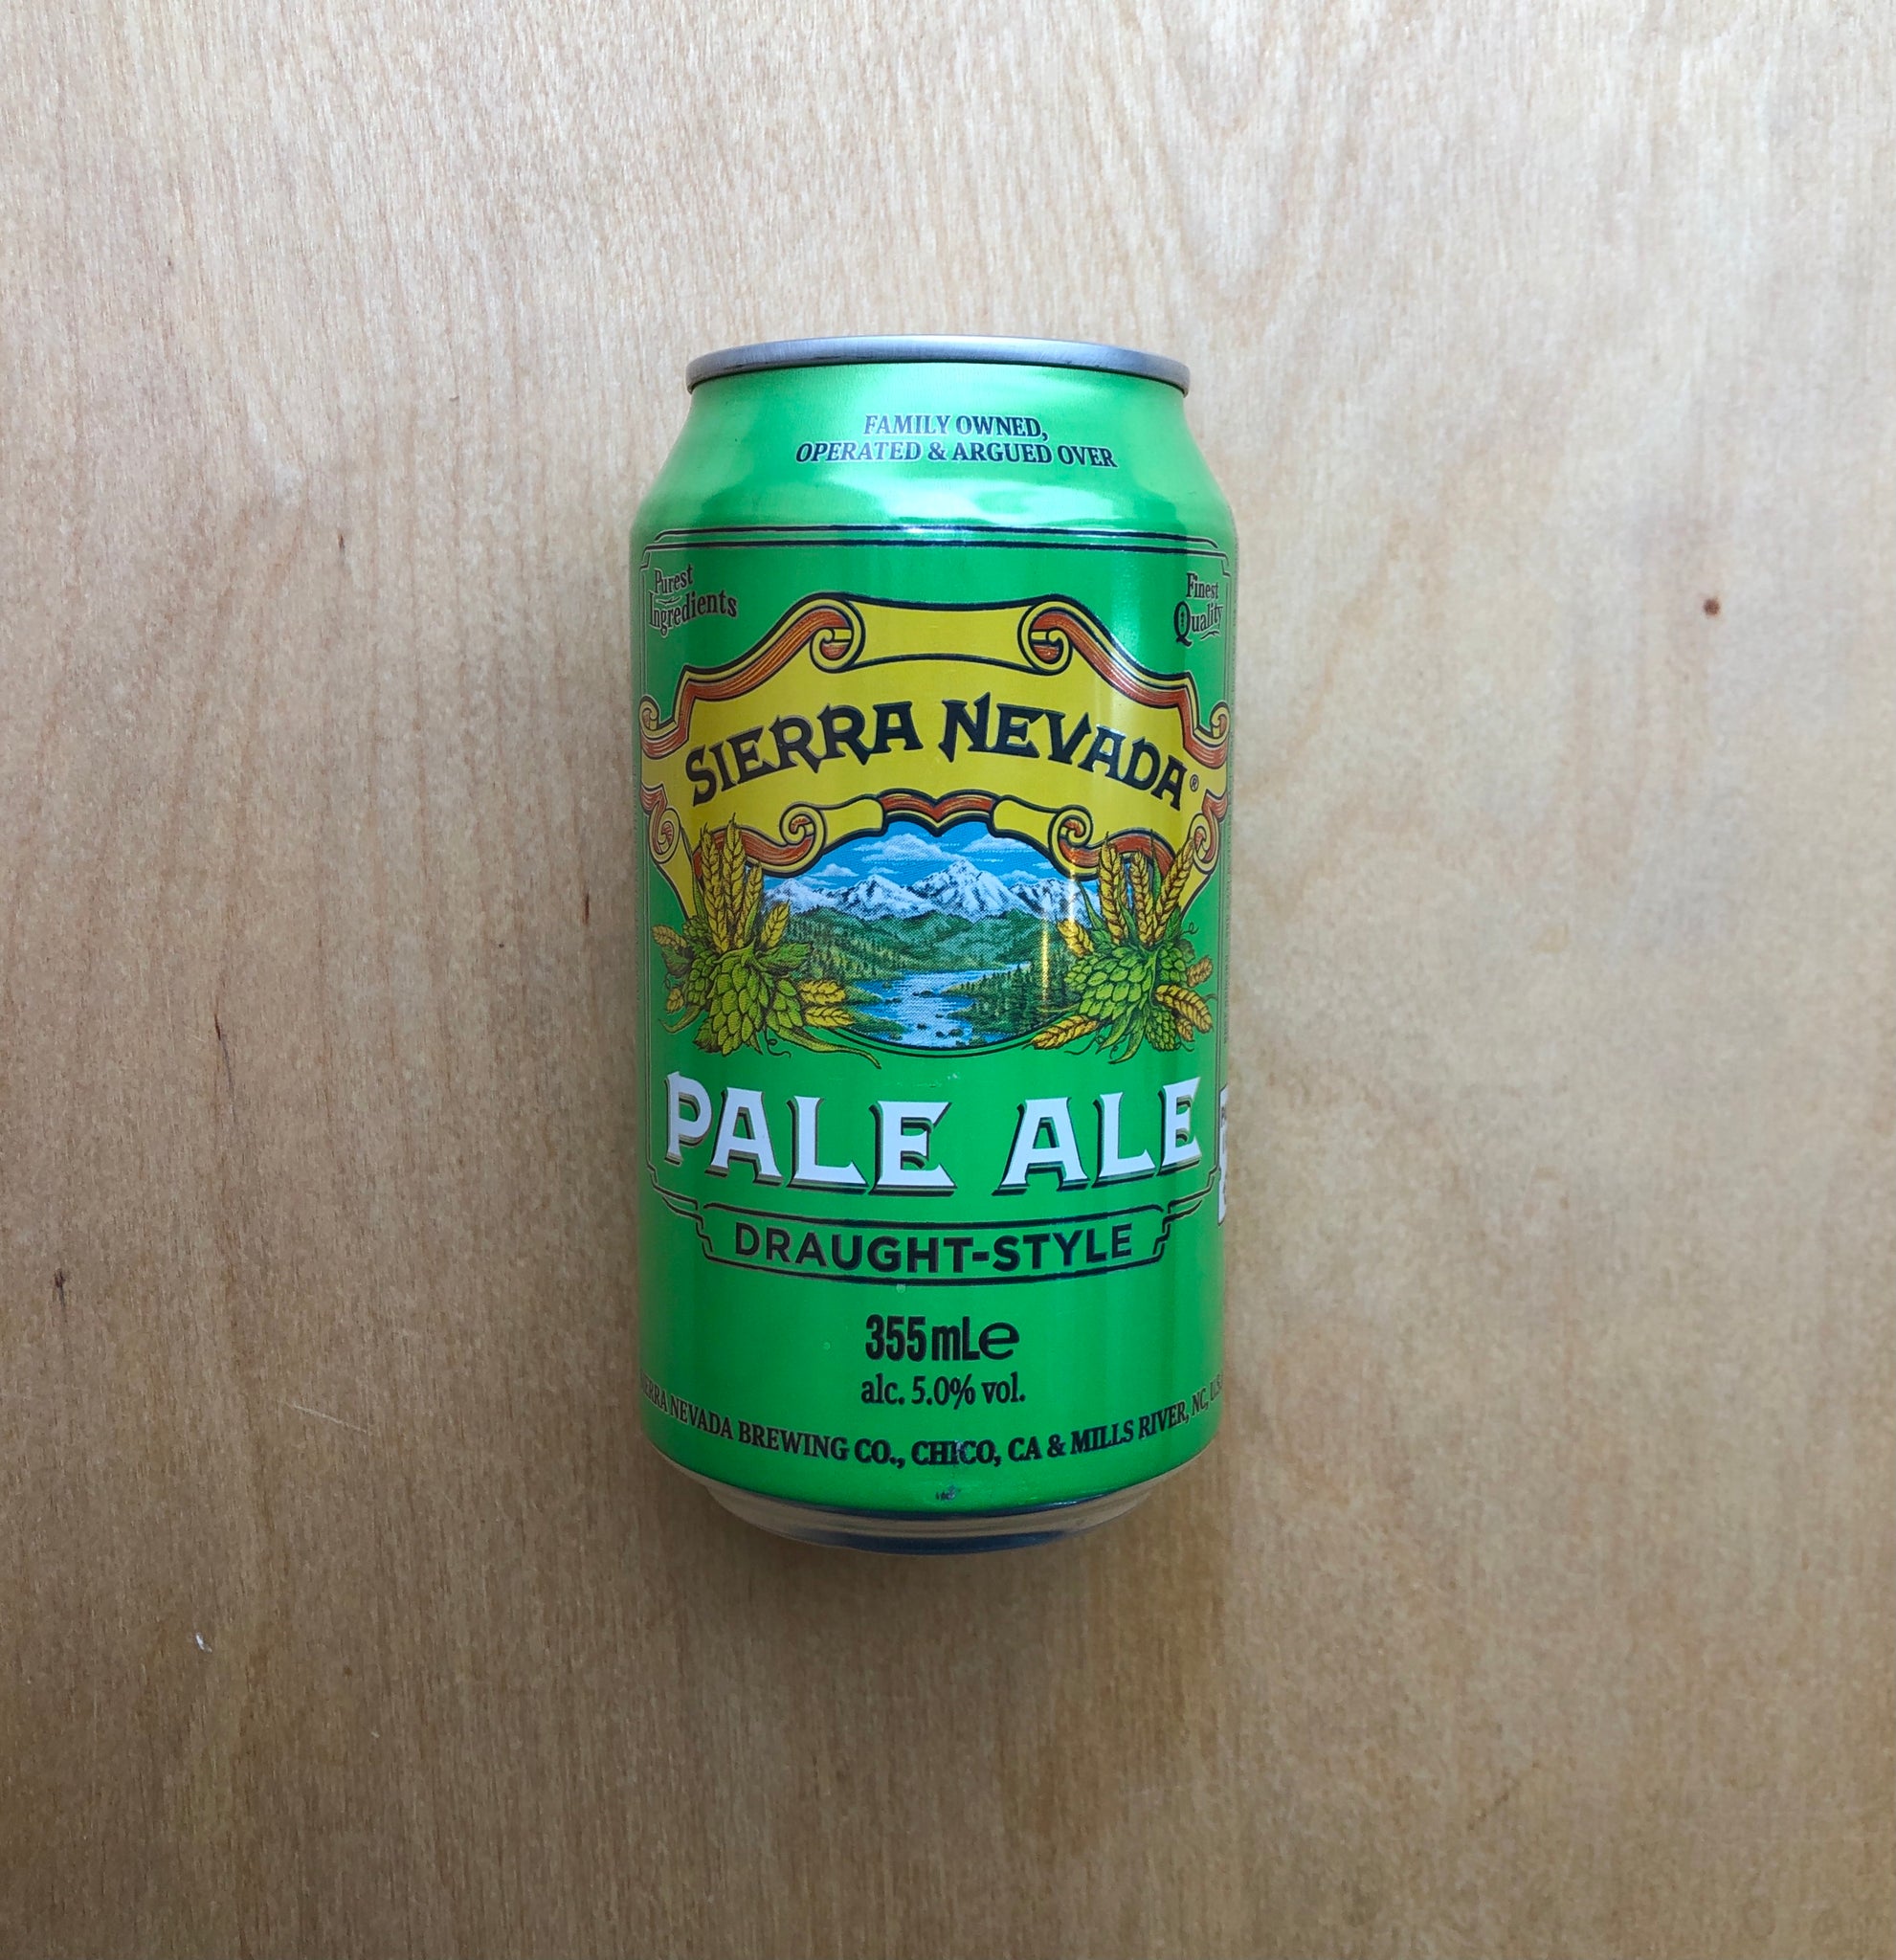 Sierra Nevada - Pale Ale 5.6% (355ml)